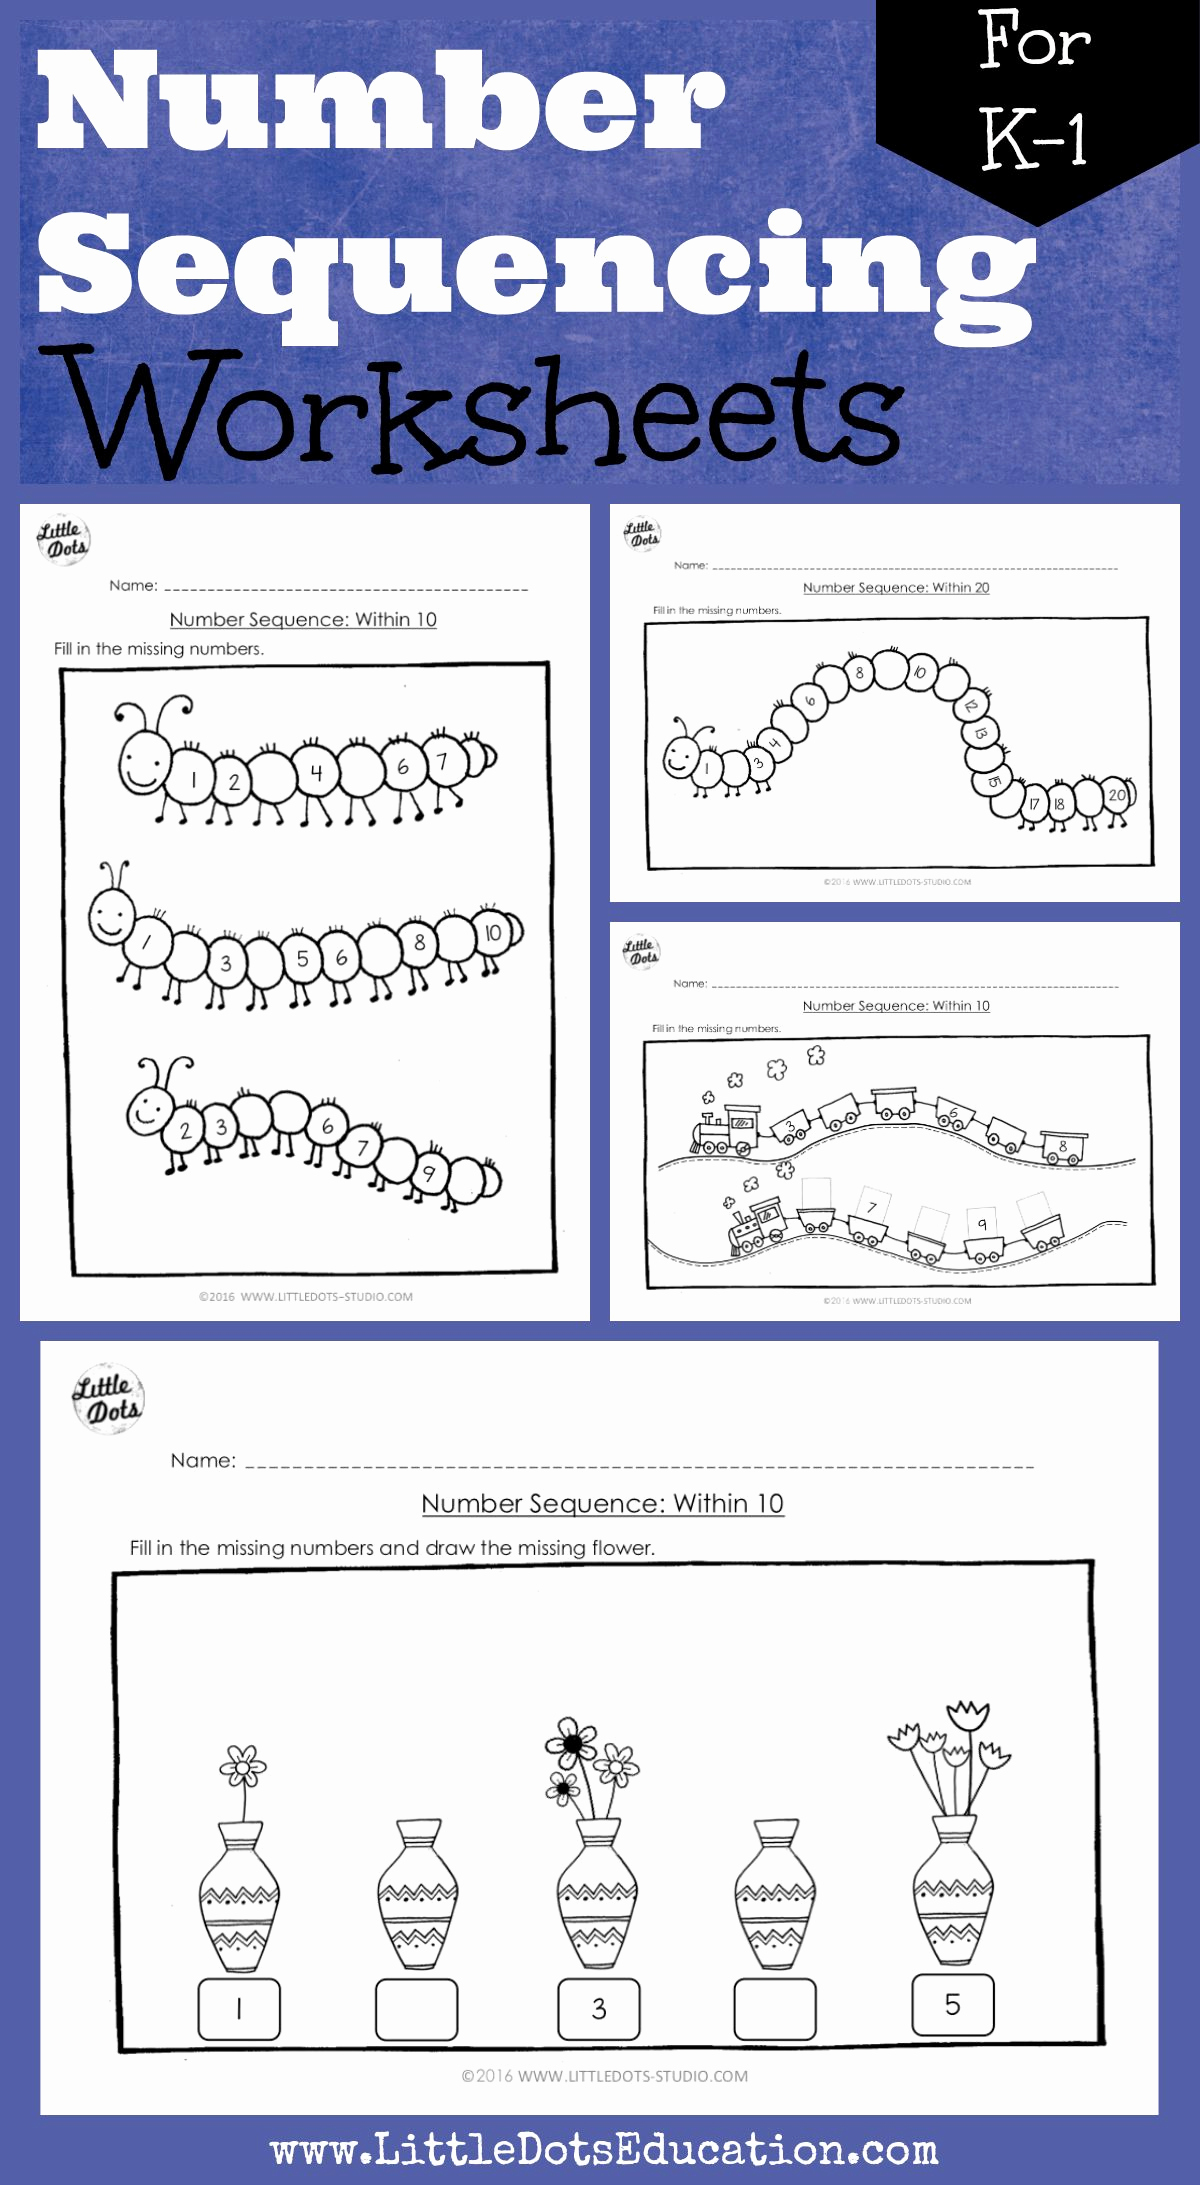 Kindergarten Sequence Worksheets Lovely Kindergarten Math Number Sequence Worksheets and